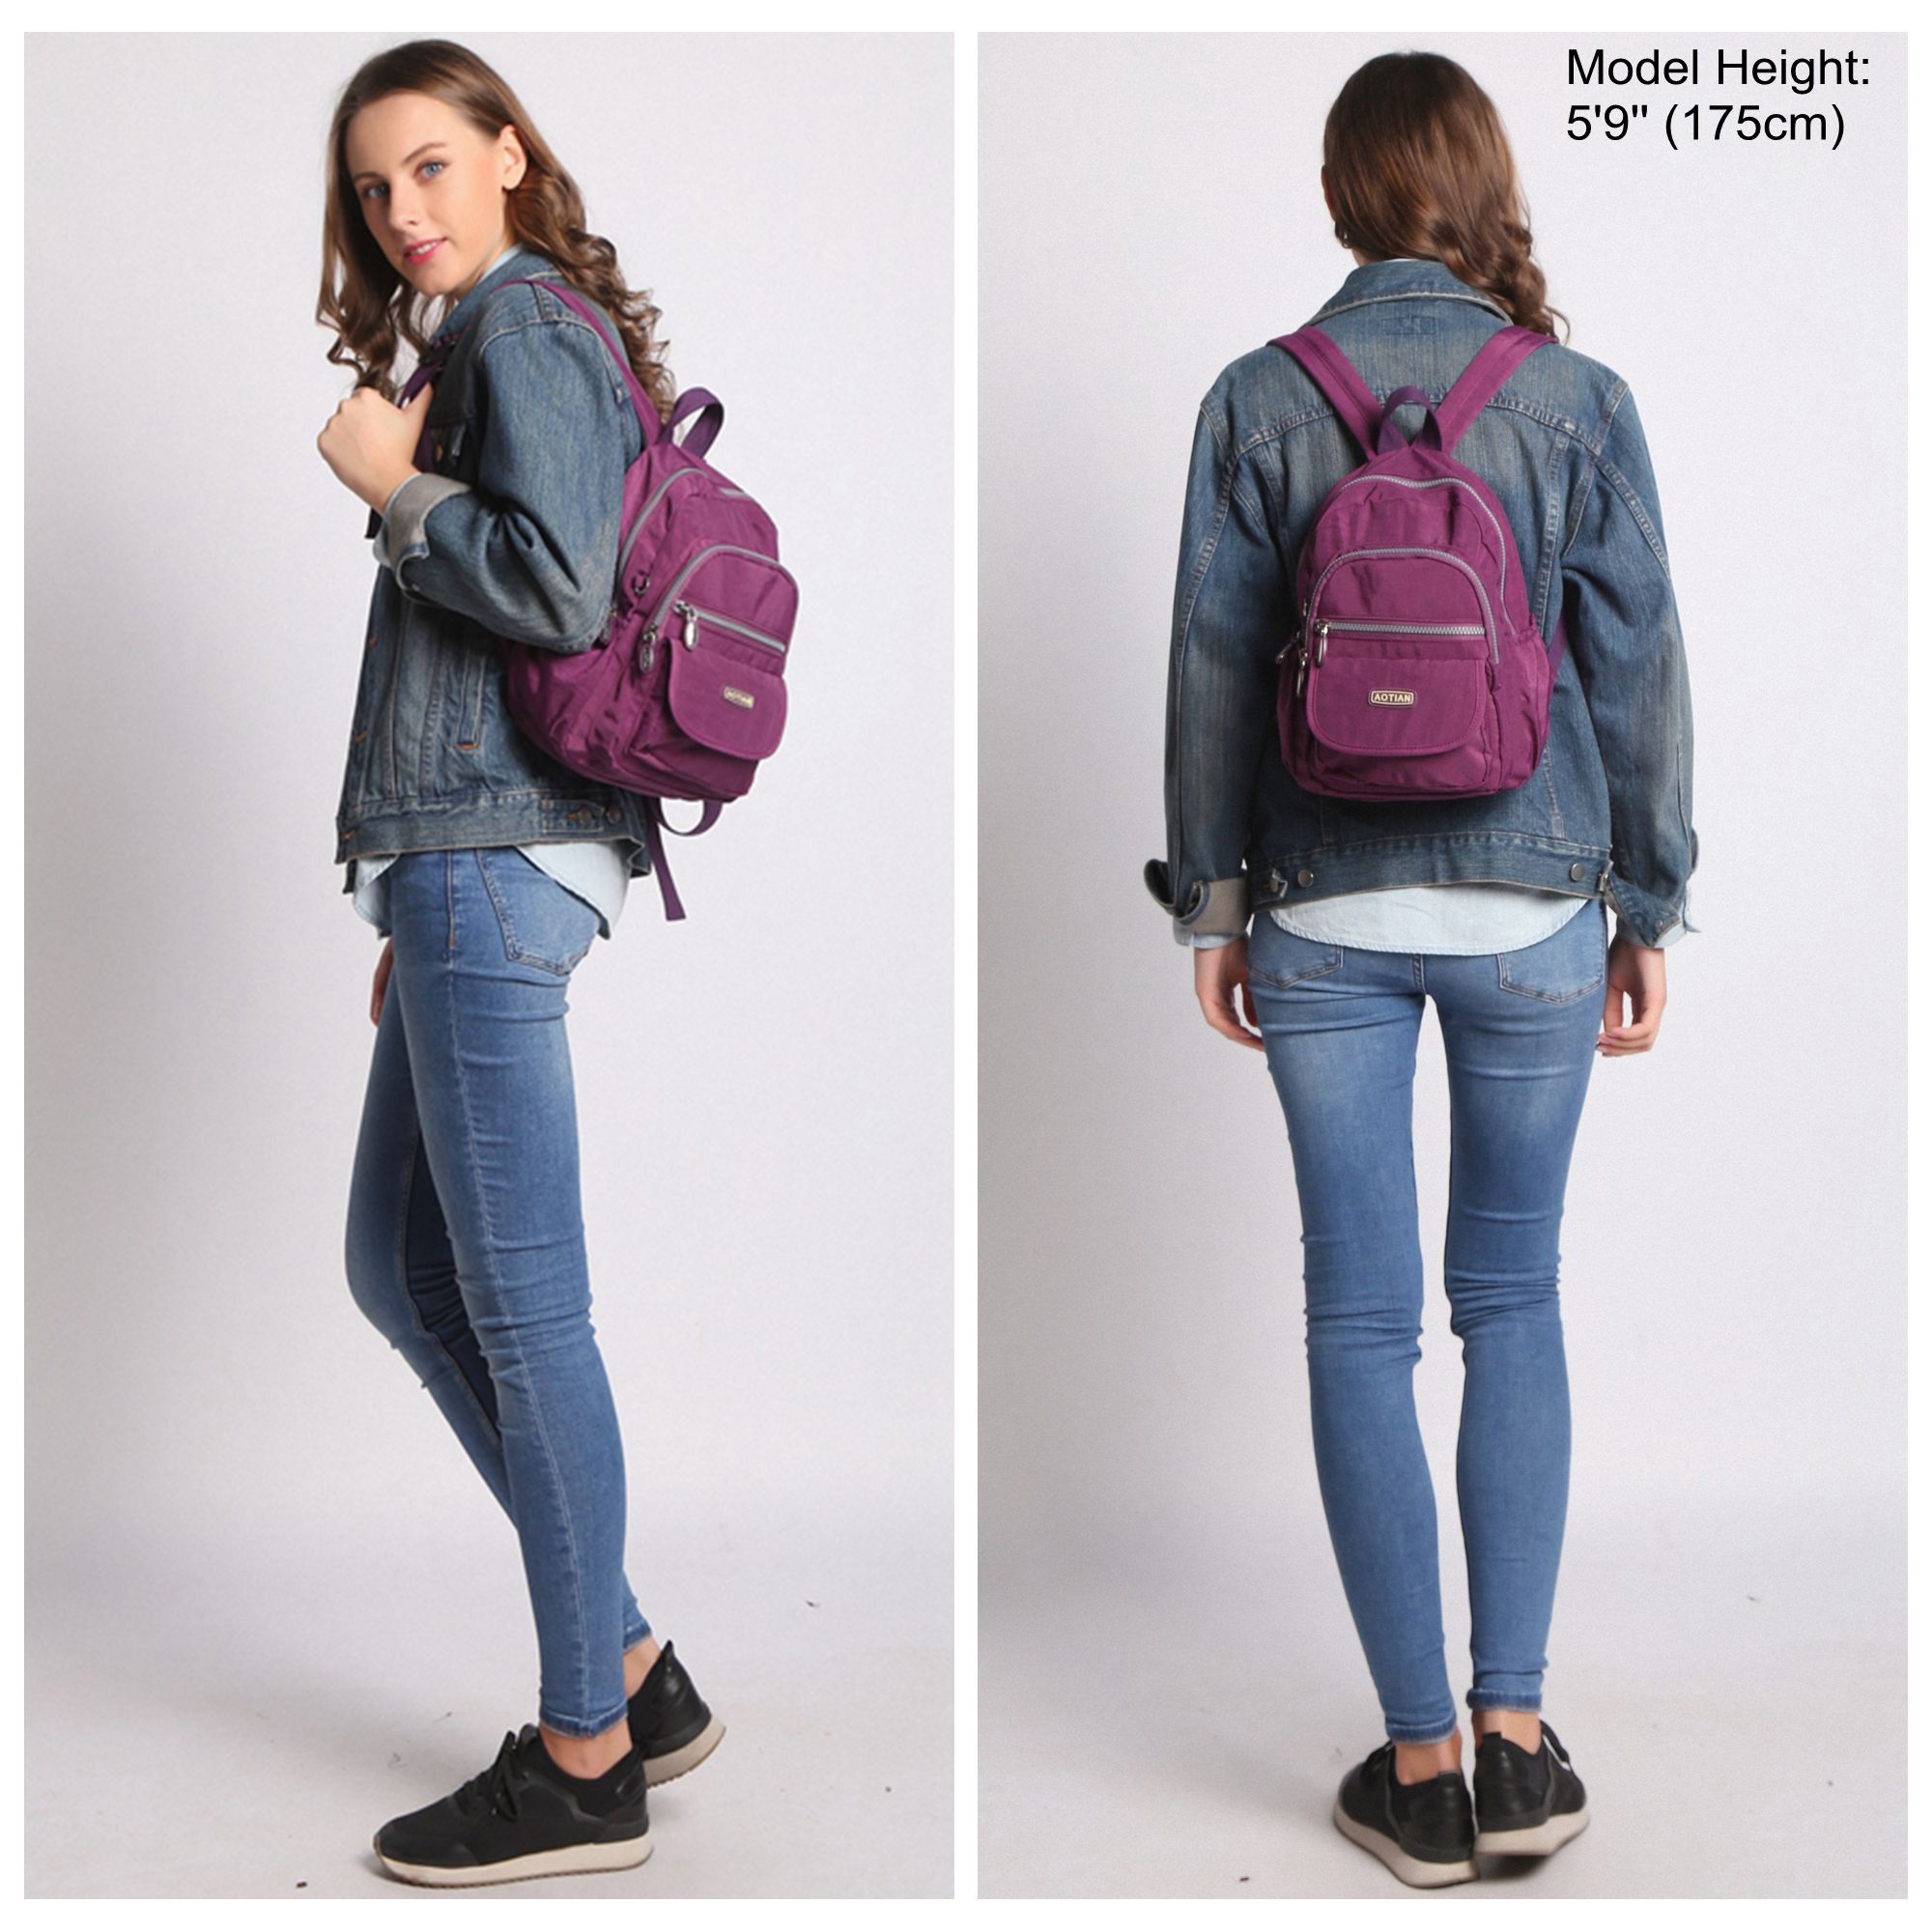 AOTIAN Mini Nylon Women Backpacks Casual Lightweight Small Daypack for Girls Purple - image 3 of 7